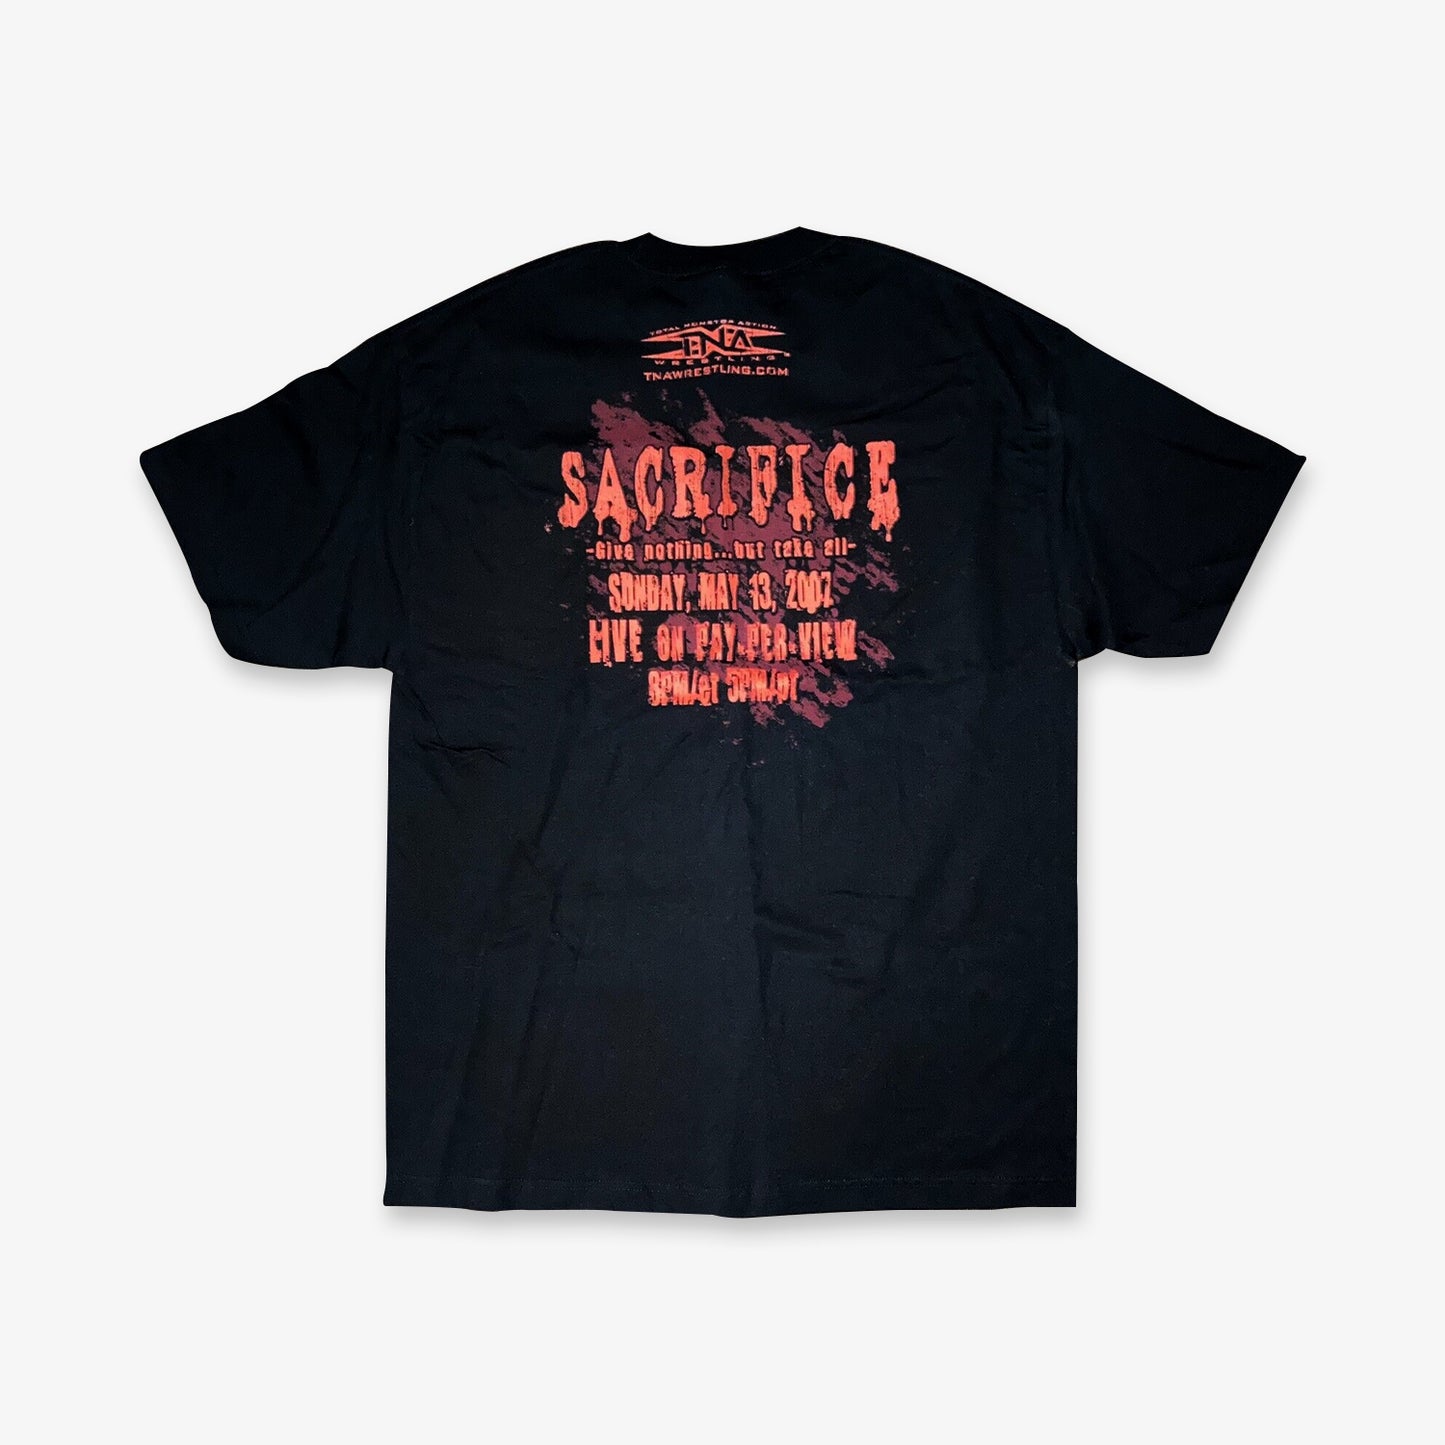 Sacrifice 2007 Event Shirt